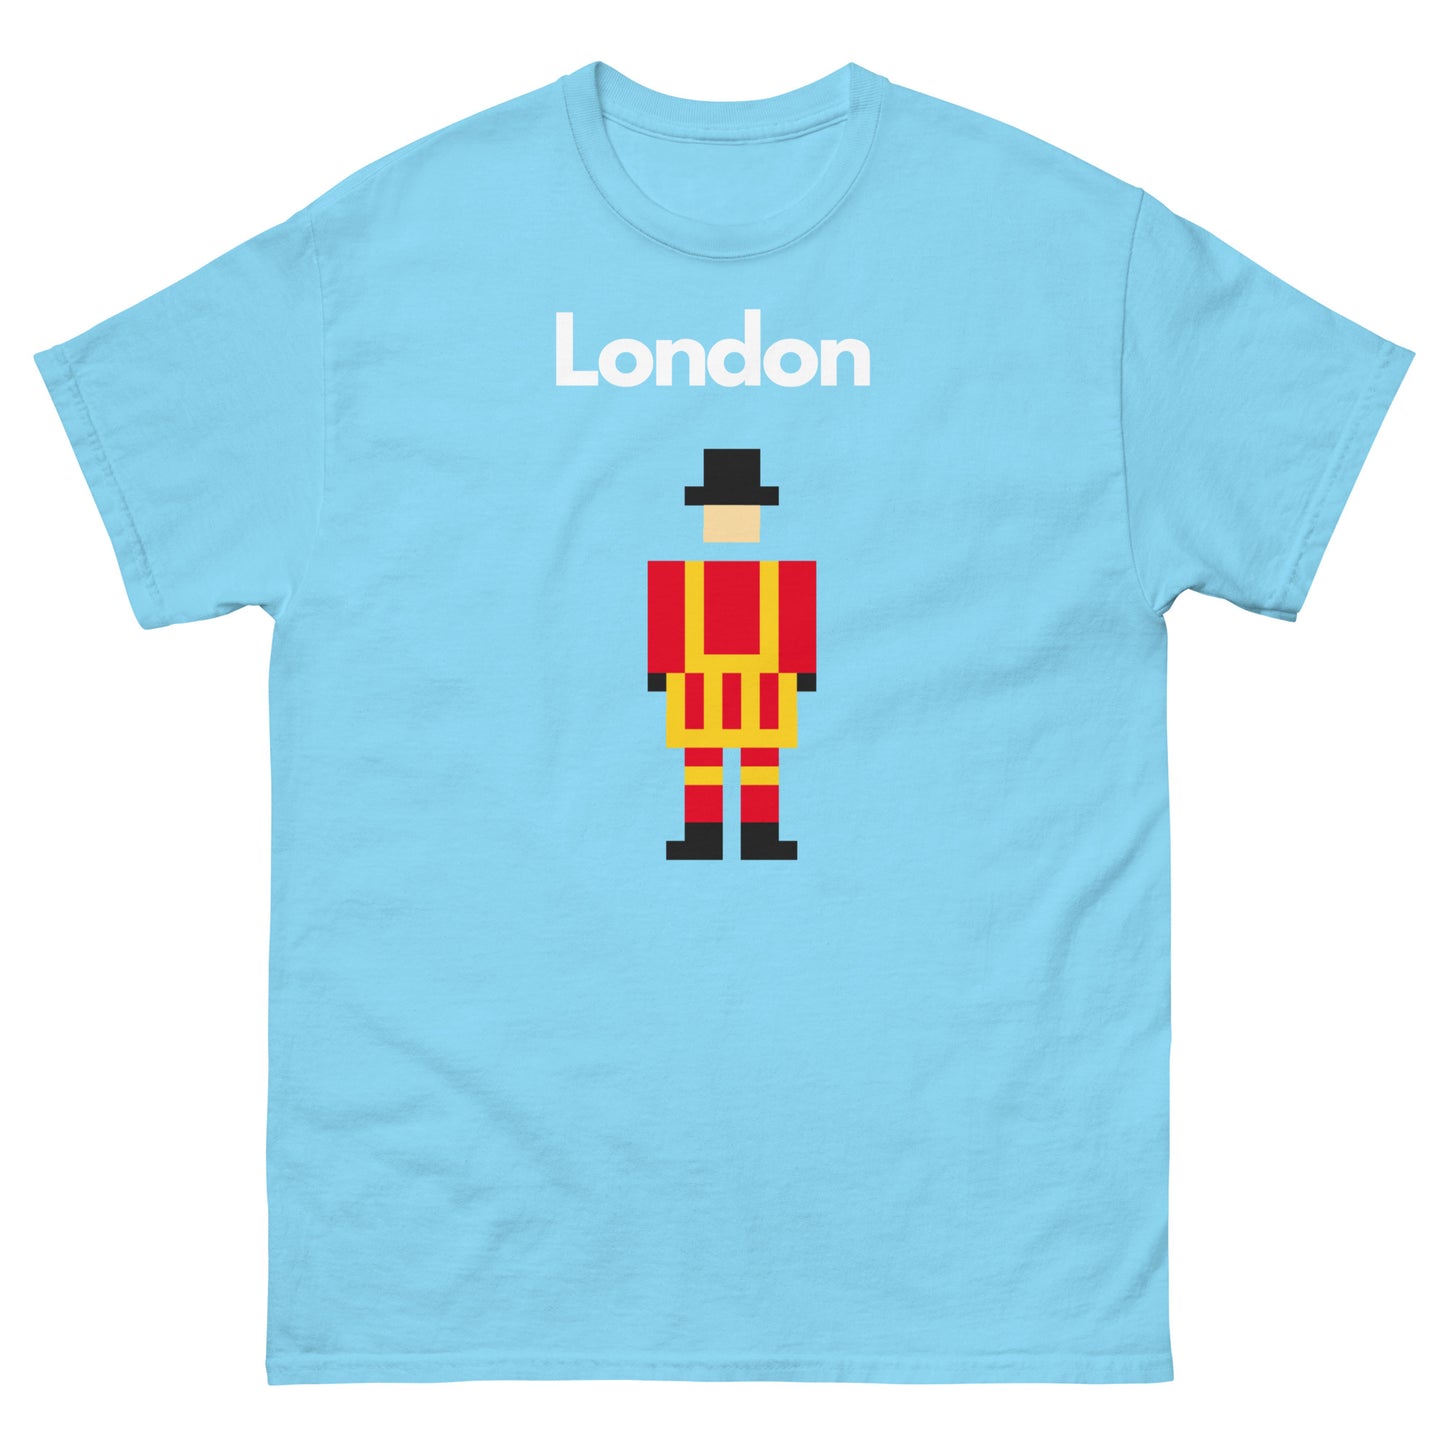 London Royal Guard Aka Beefeater - Men's classic tee